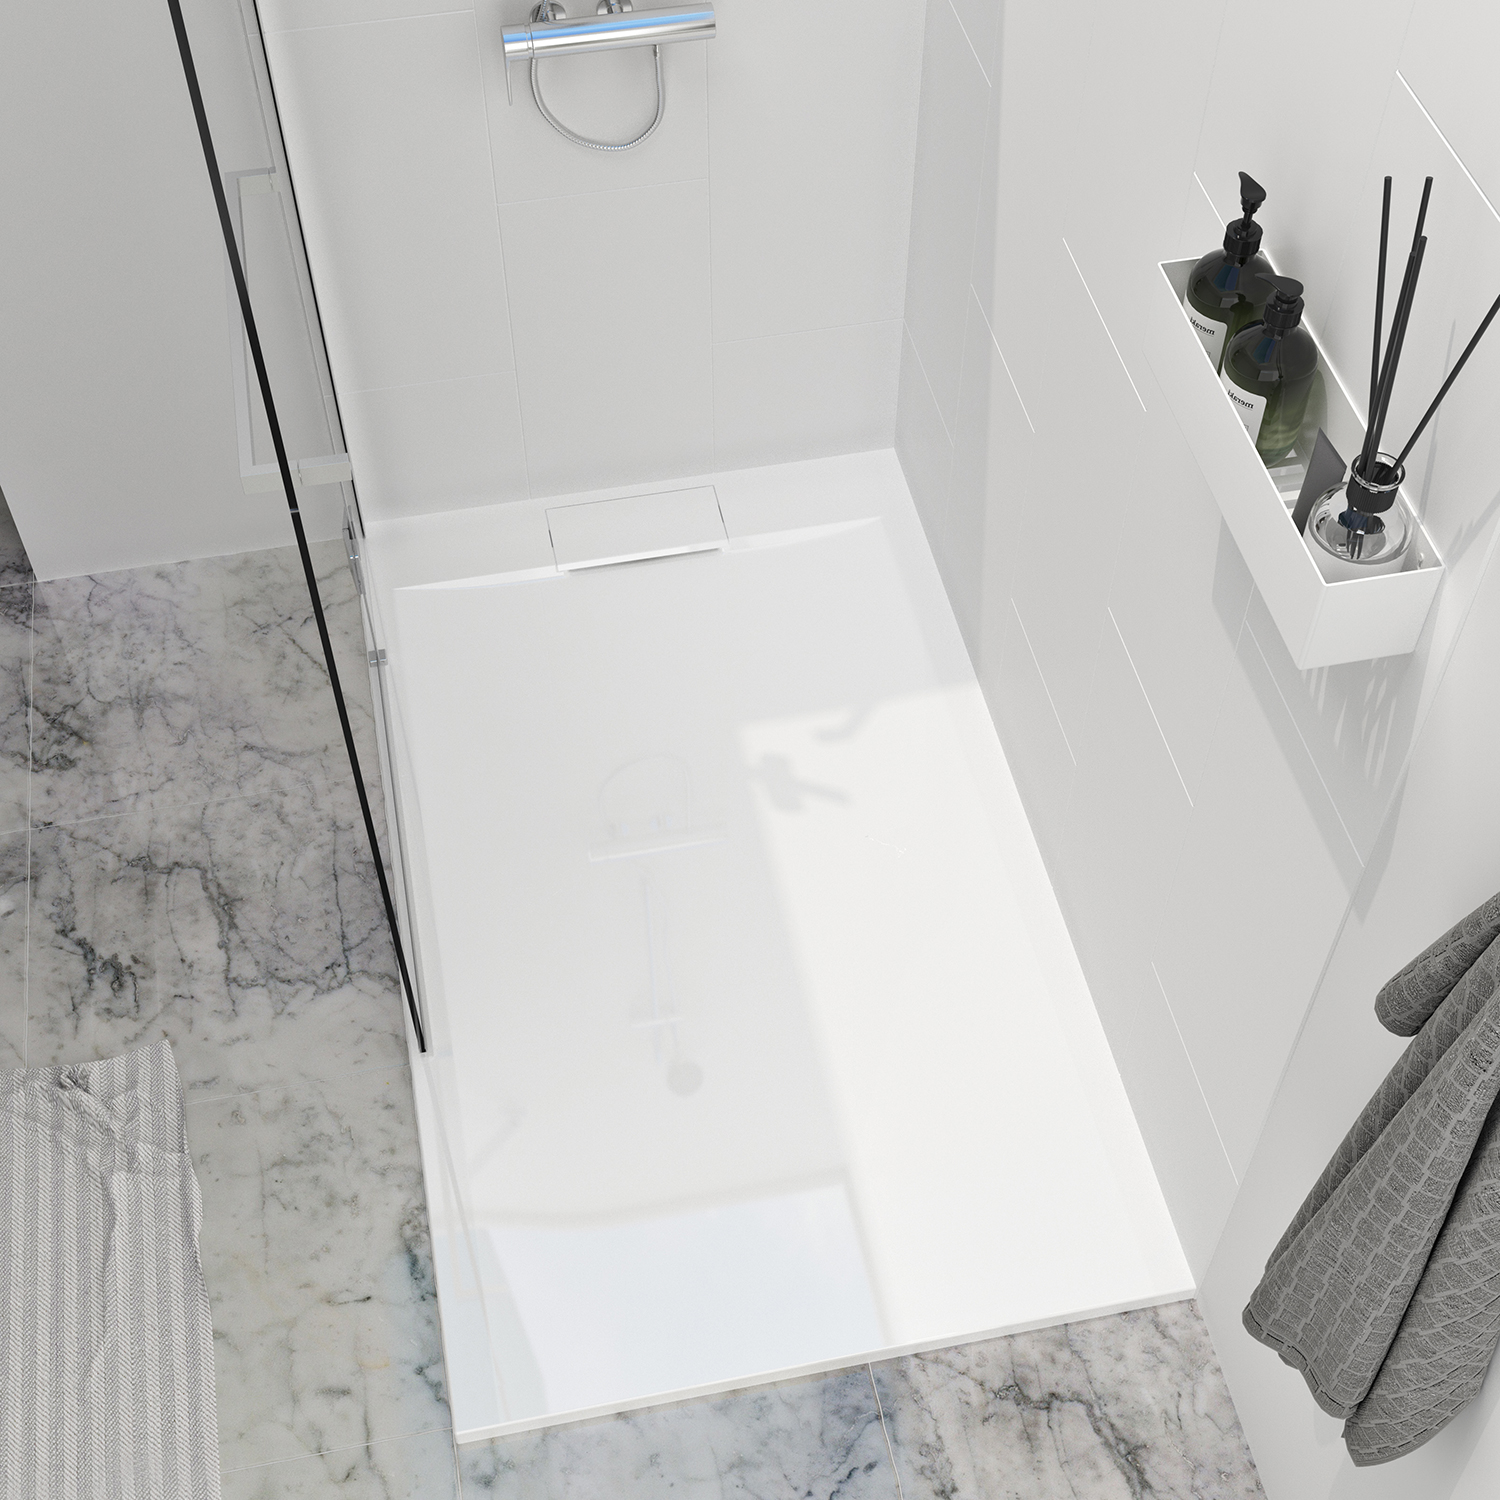 Shower base Liss 48 x 32, custom-made tile flange installation, in glossy white